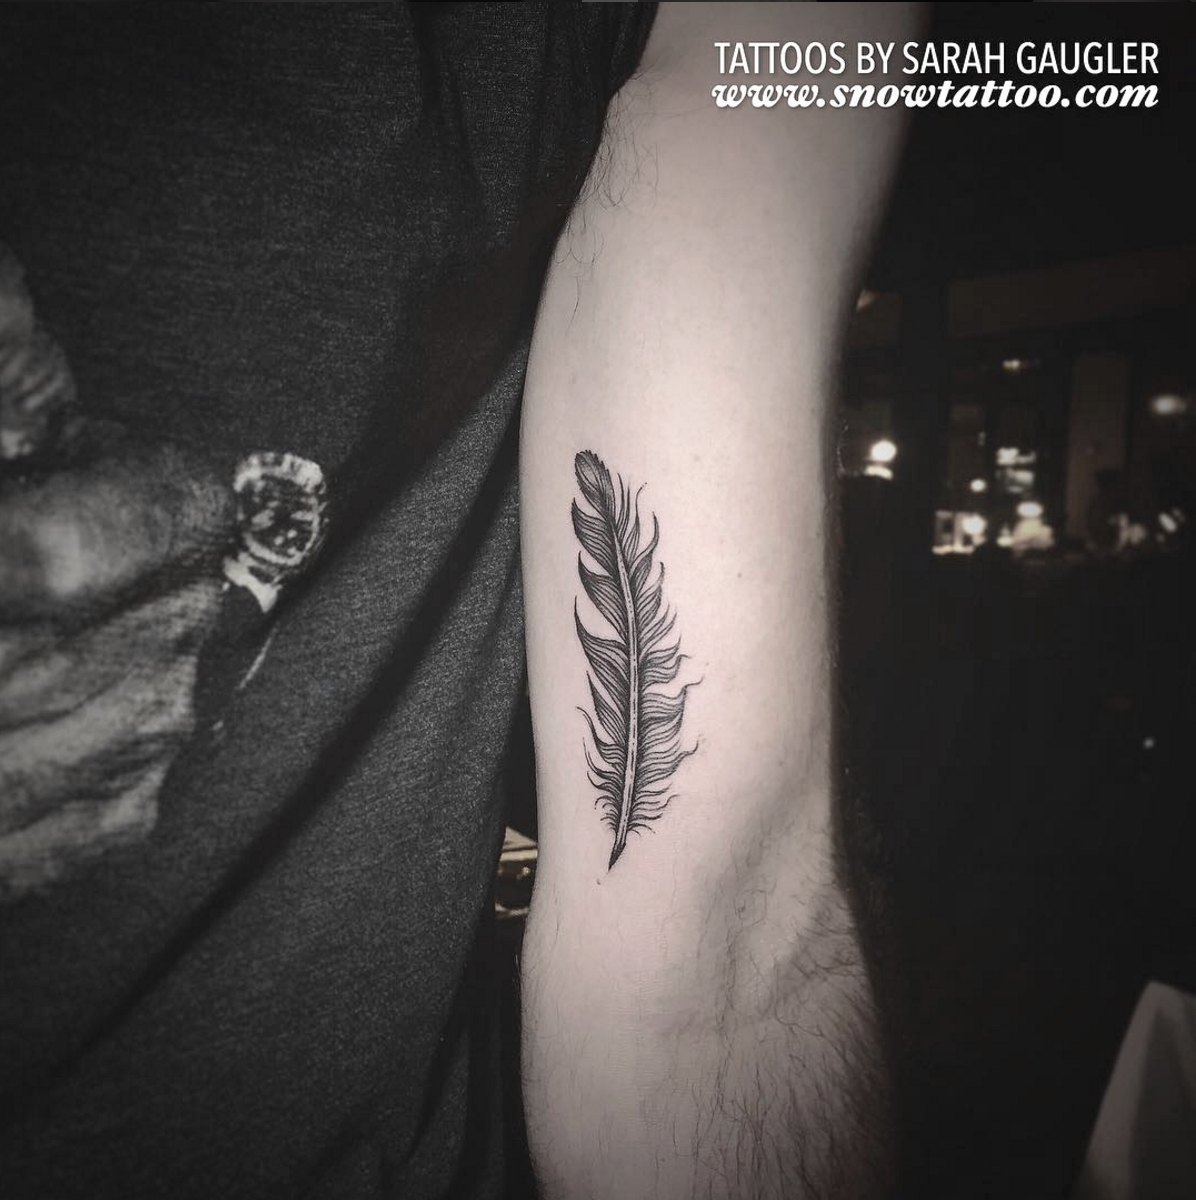 Sarah Gaugler Snow Tattoo Custom Feather Line Work Fine Line Finelinetattoo Detailed Intricate New York Best Tattoos Best Tattoo Artist NYC.png